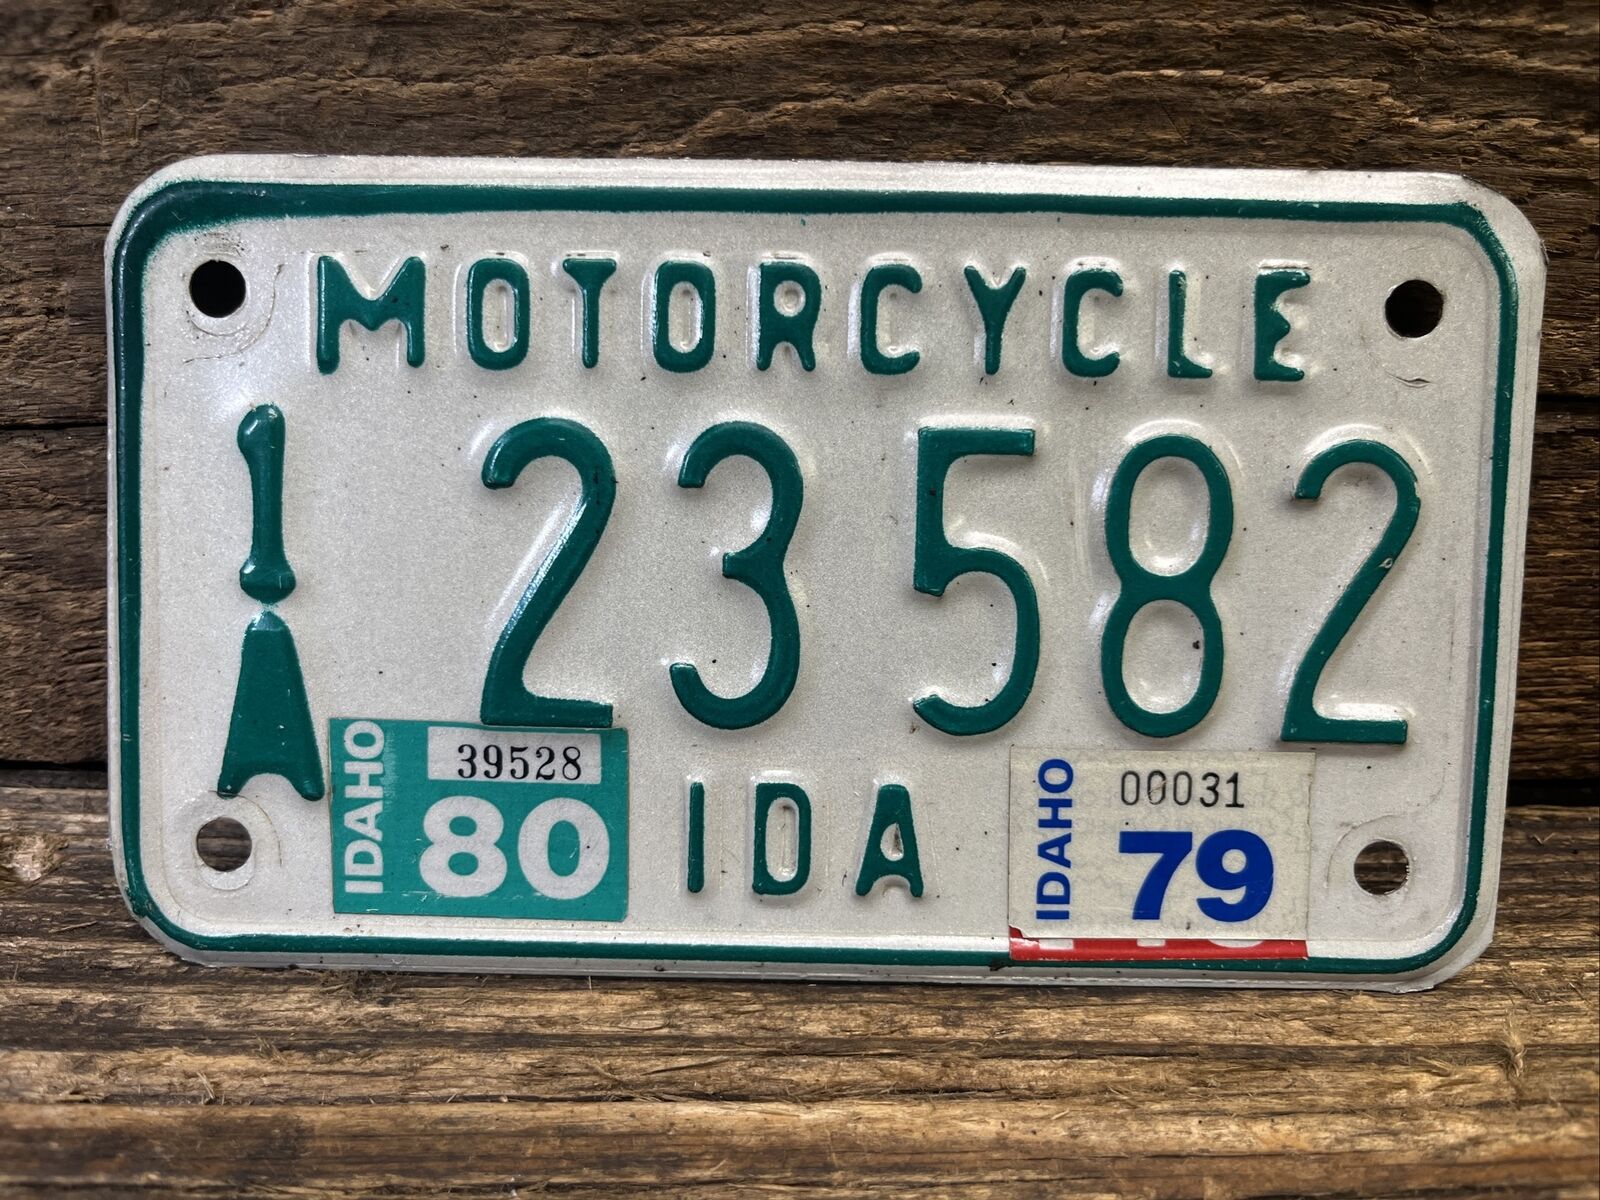 1979 - 1980 Idaho MOTORCYCLE License Plate - 23582 - 1A Ada County